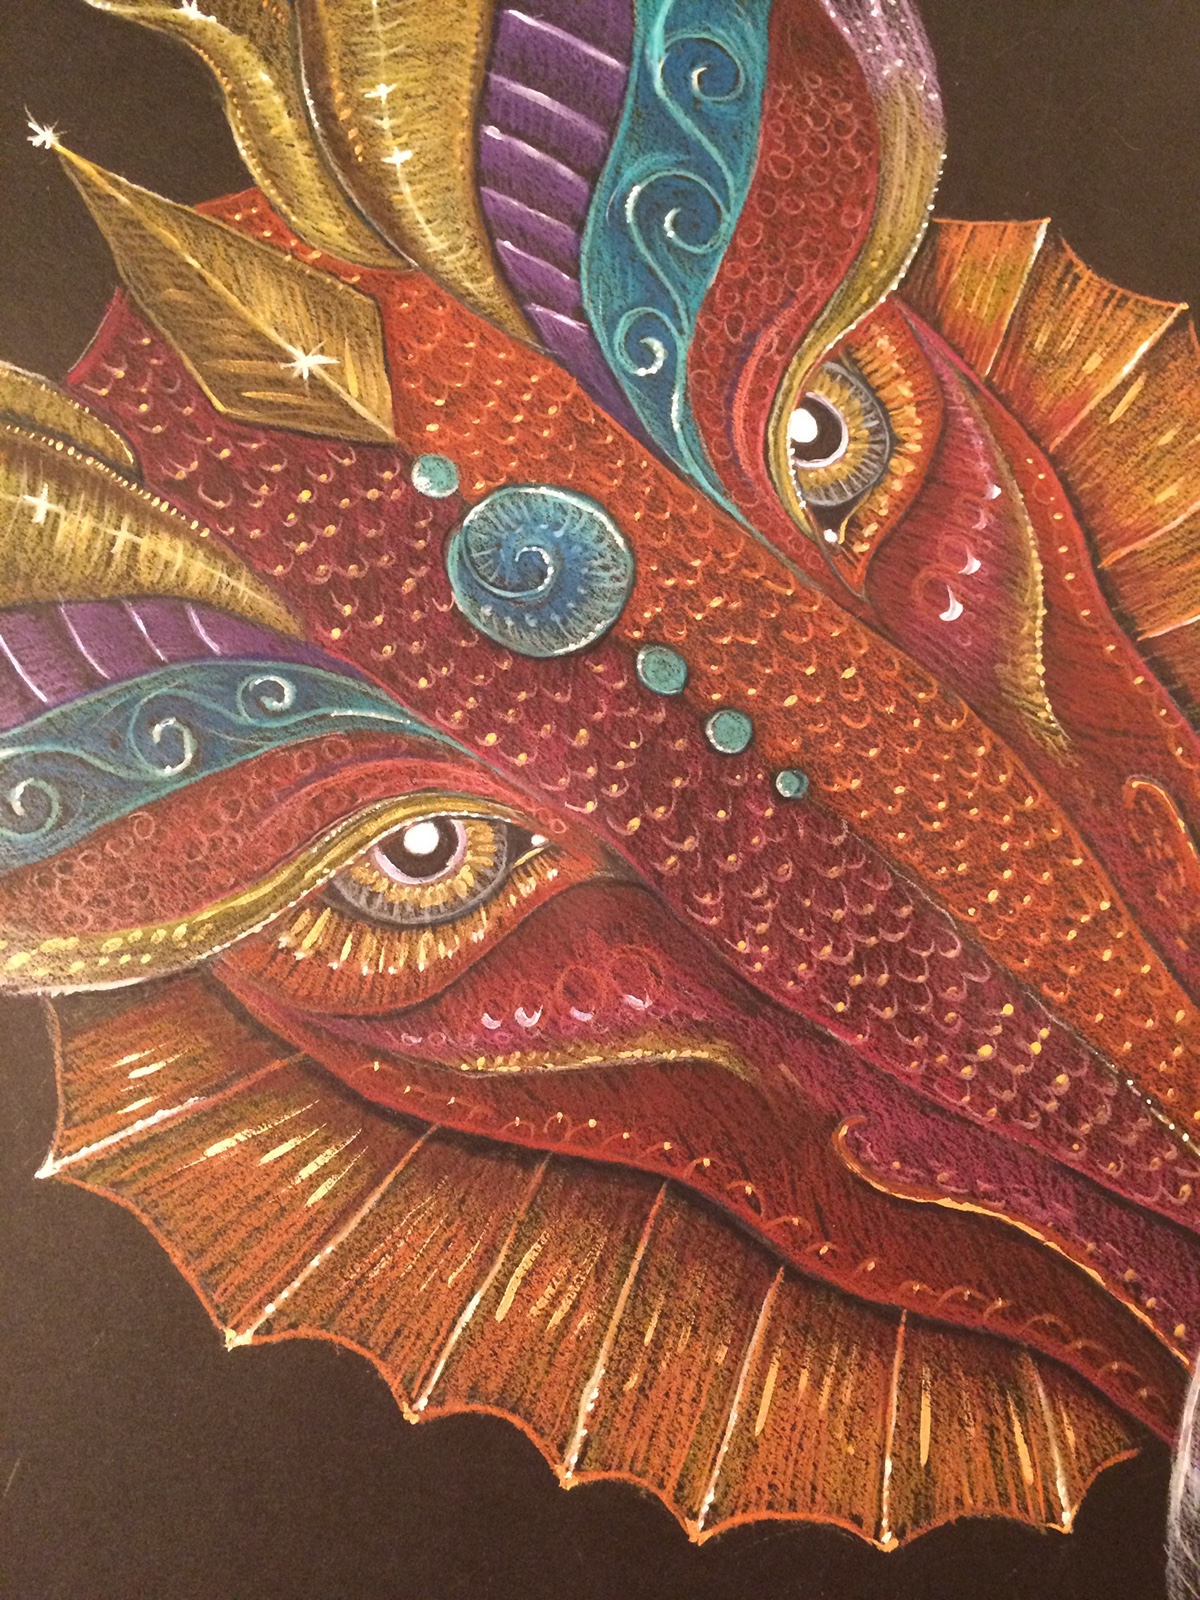 Adobe Portfolio dragon mystical Totem mythical spirit Guide Colourful  pencil crayon